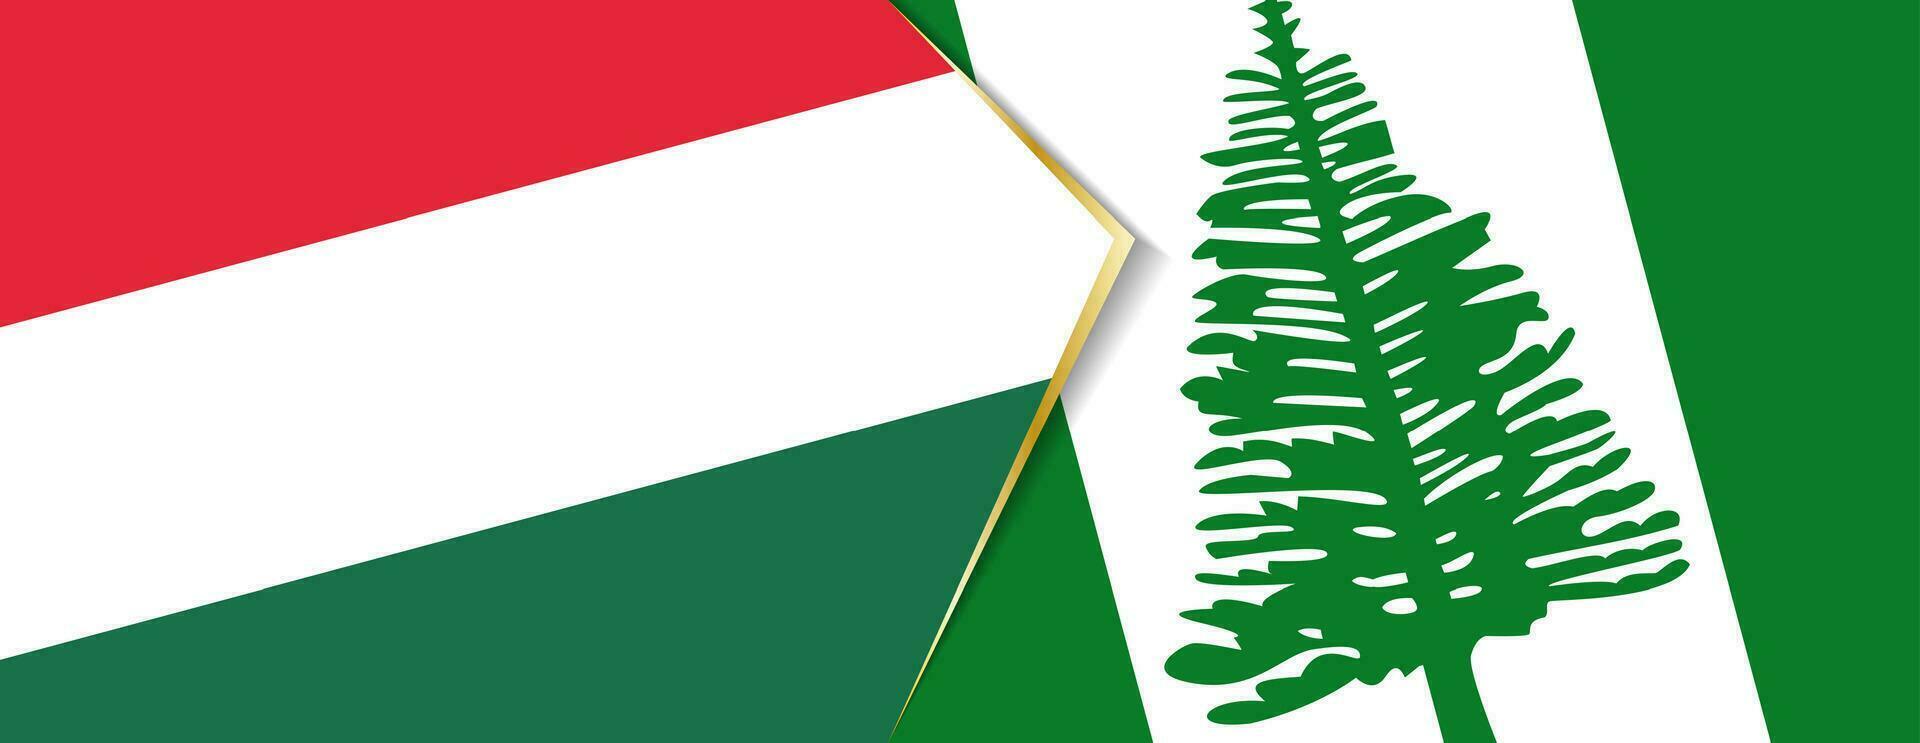 Ungheria e norfolk isola bandiere, Due vettore bandiere.